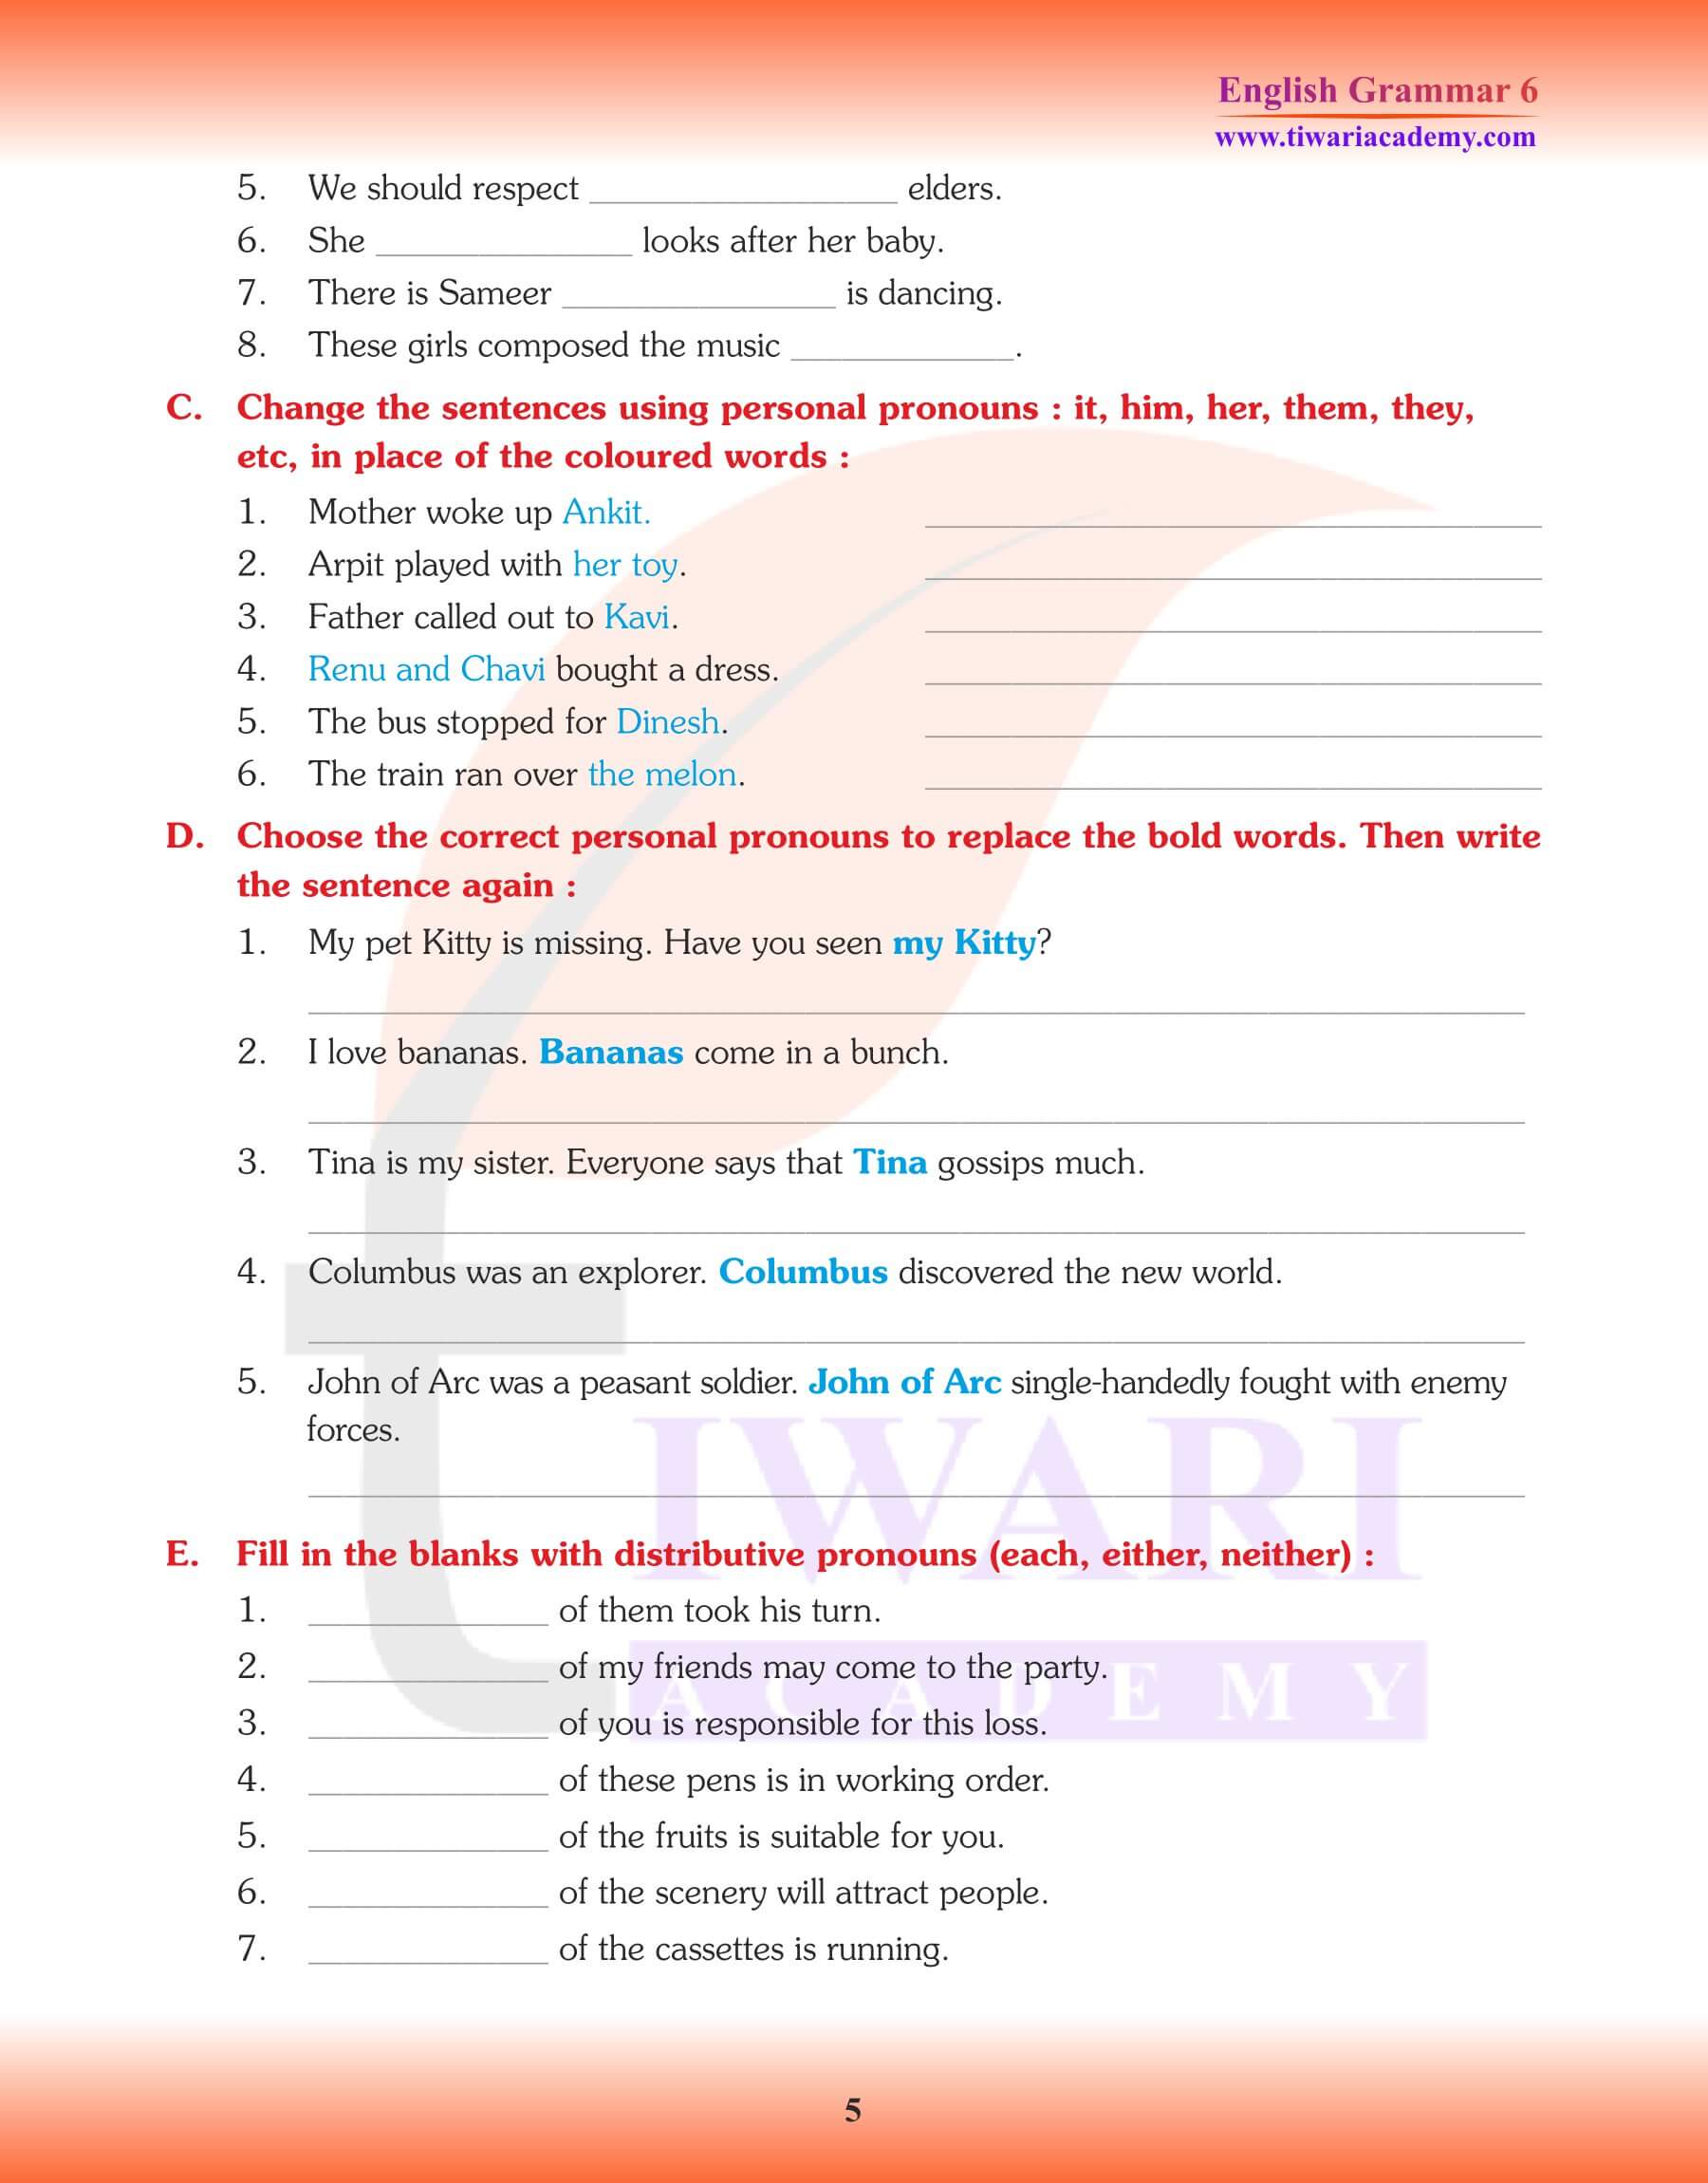 Class 6 English Grammar Pronoun Assignments